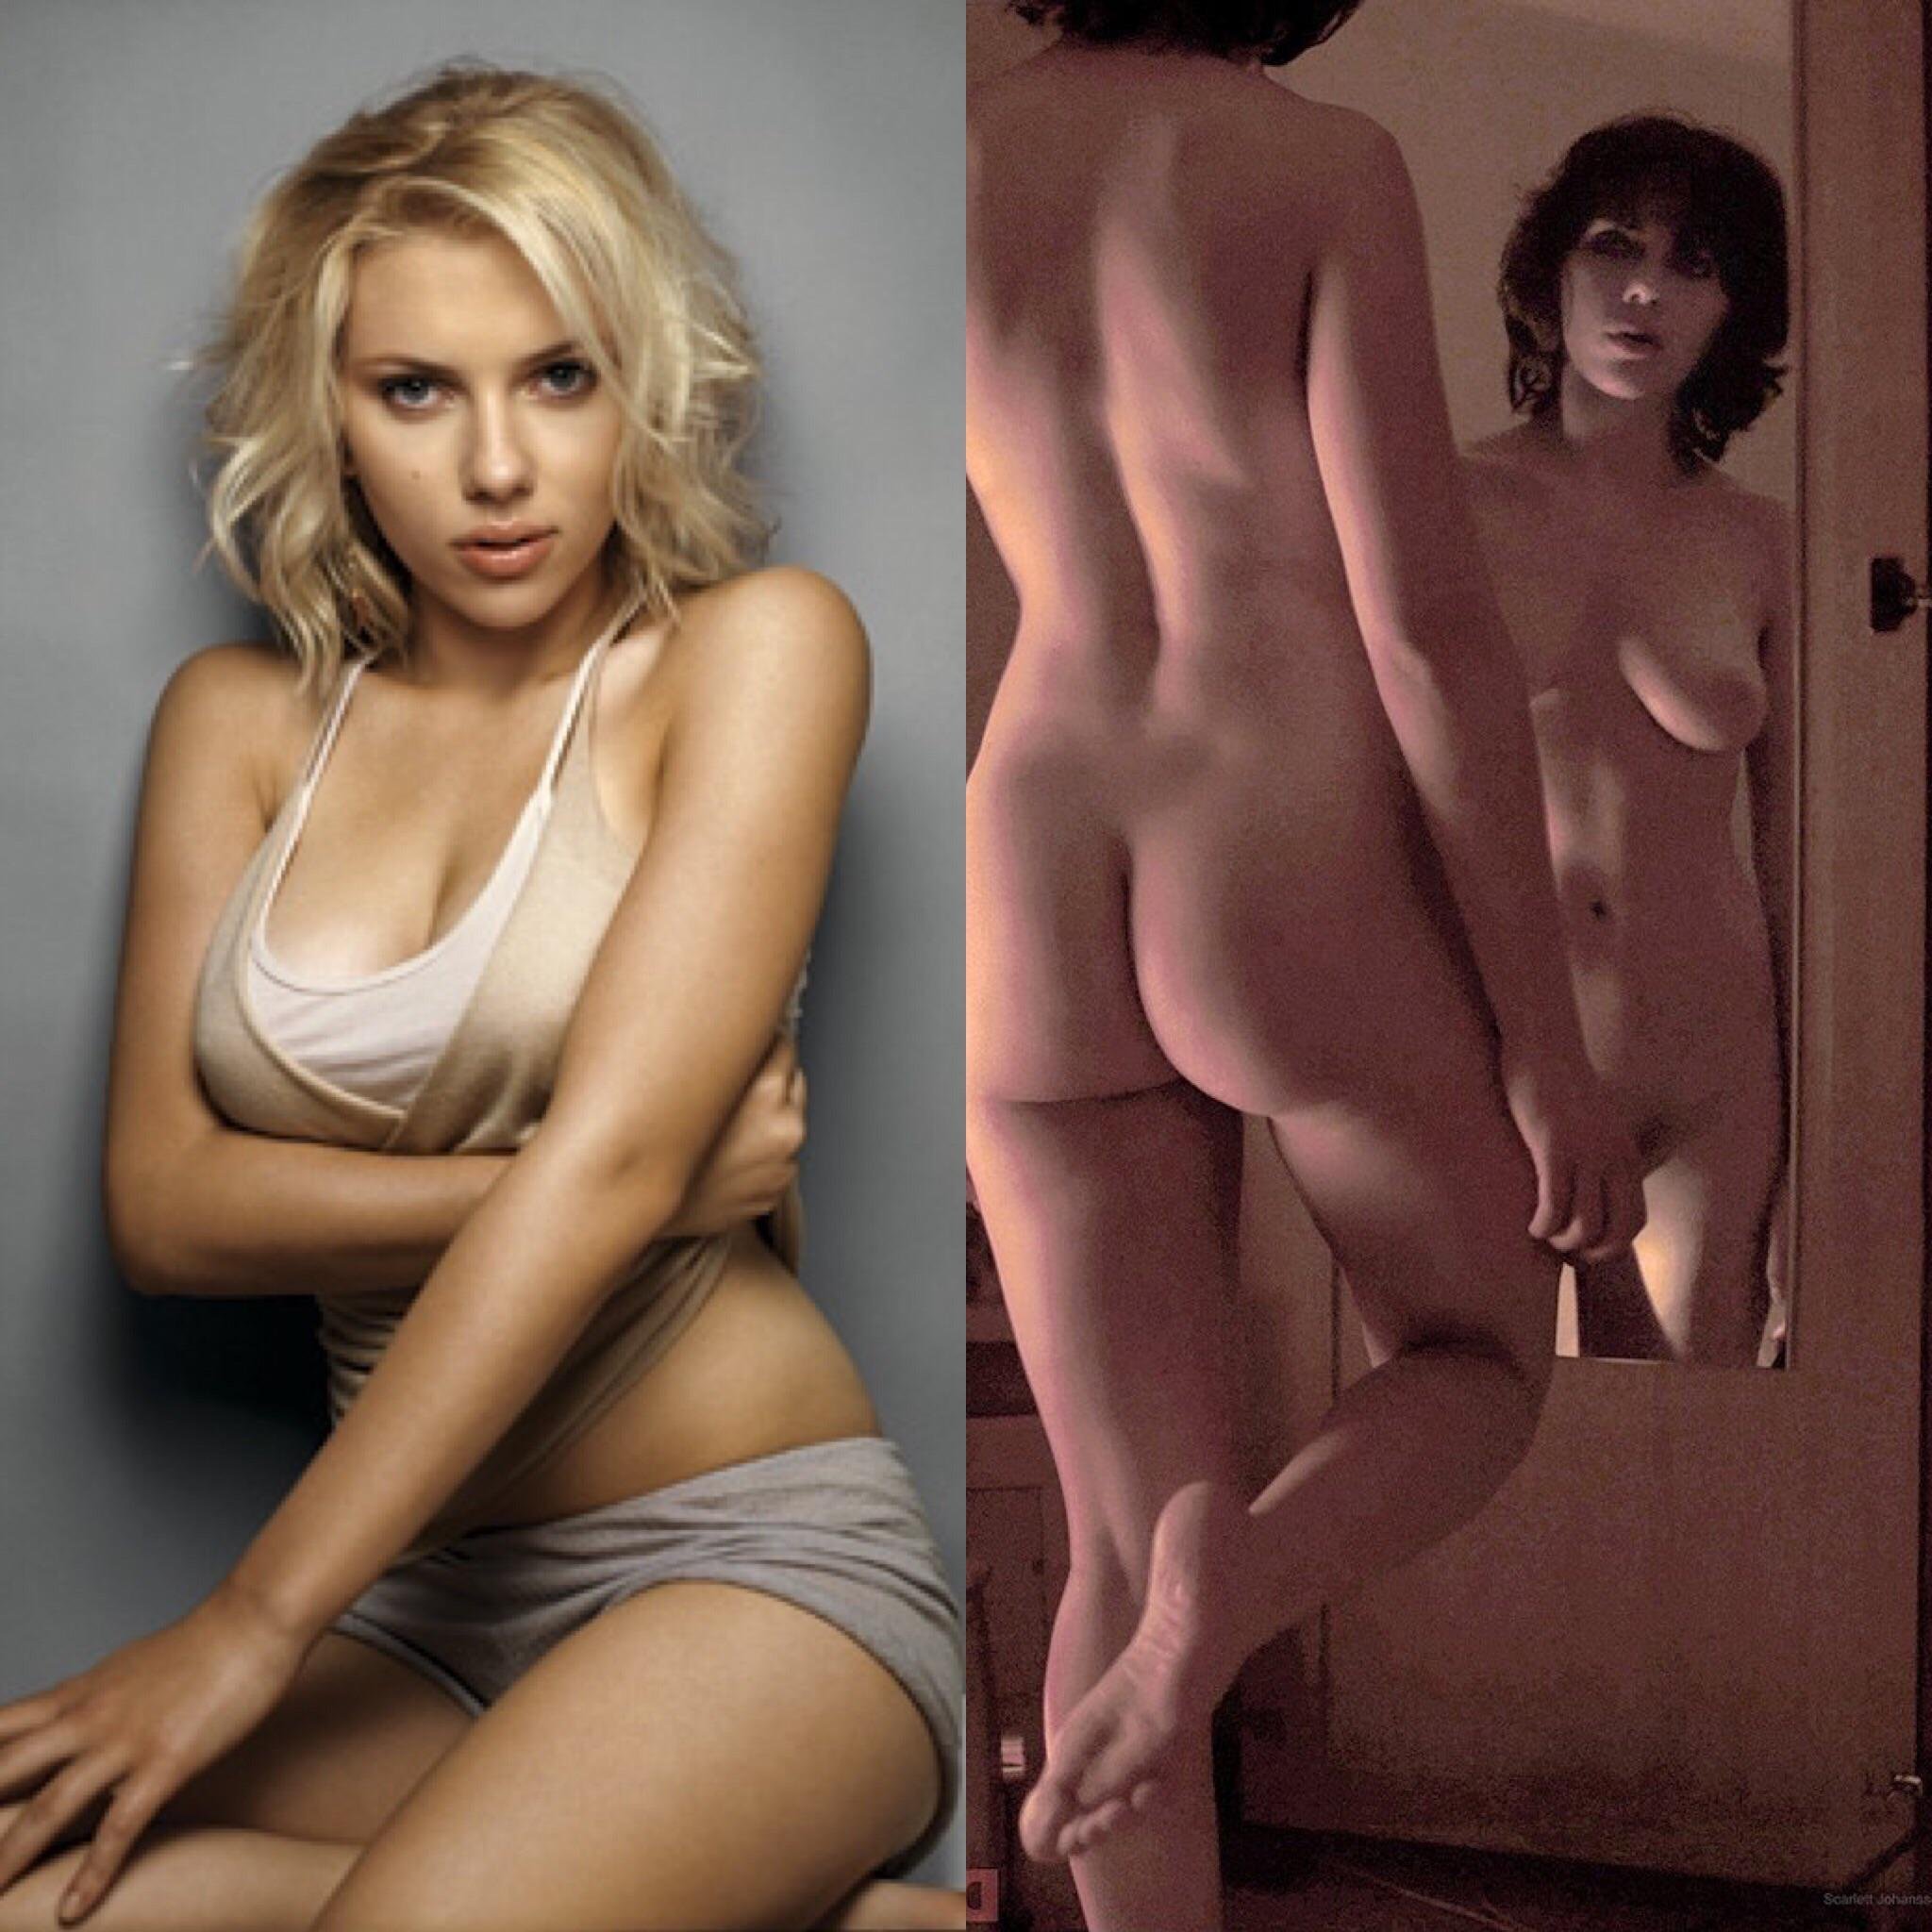 bill blaise share scarlett johansson nude tits photos